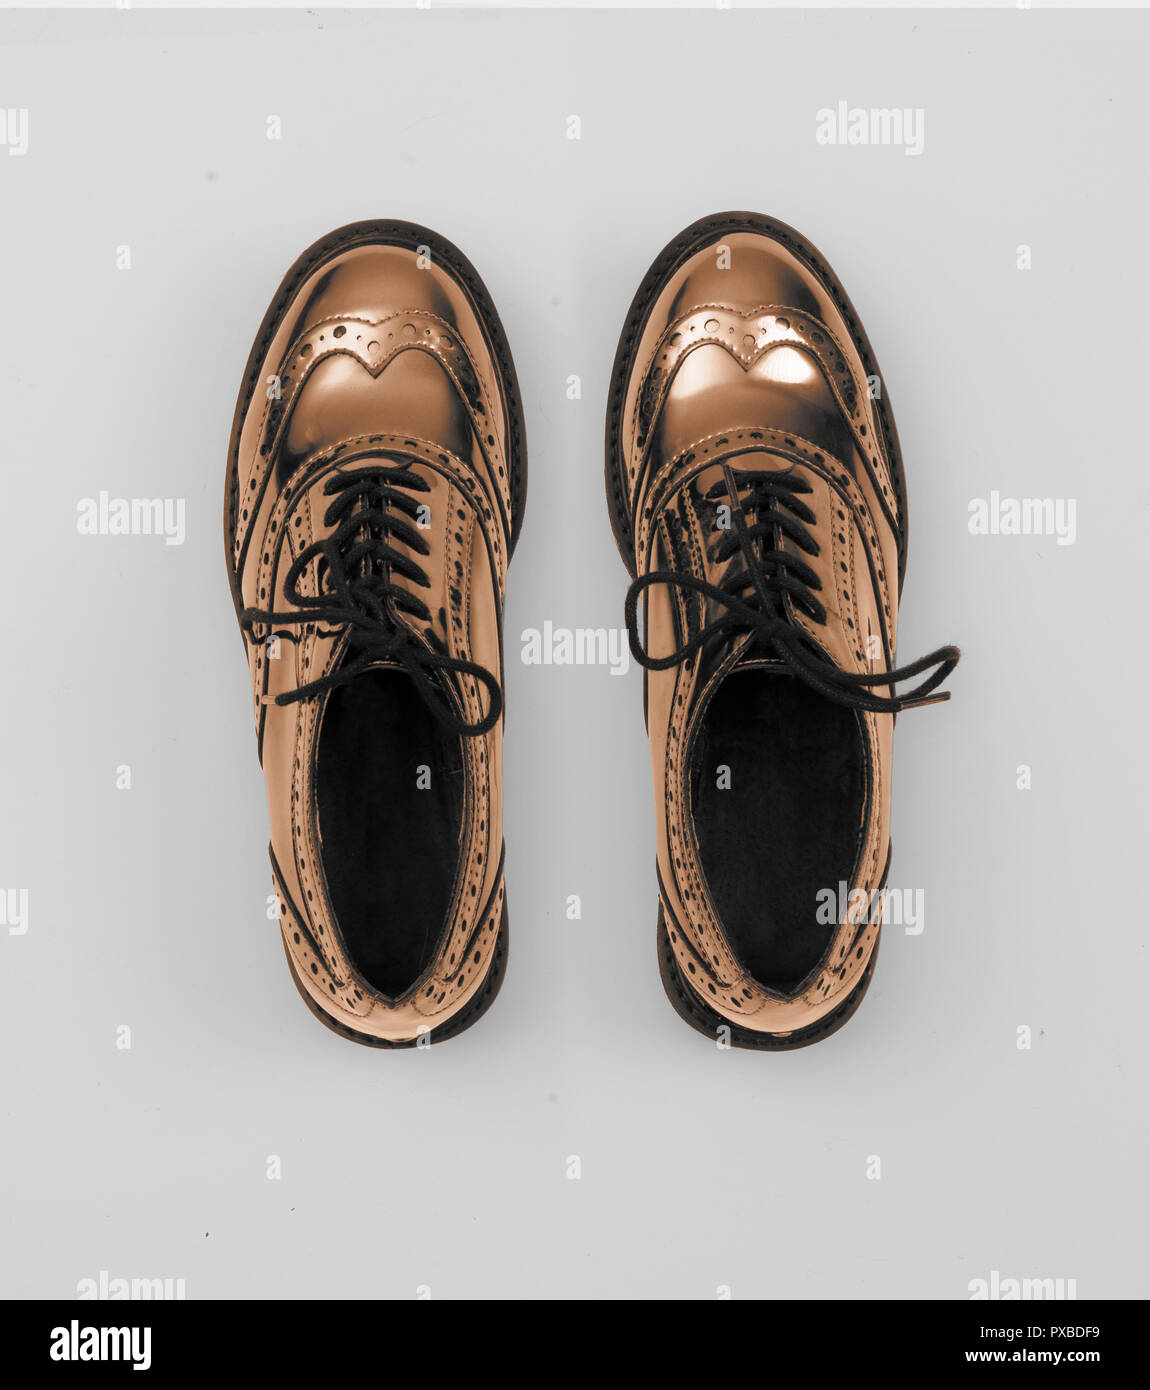 copper metallic women budapester shoes isolated on white grey background Stock Photo